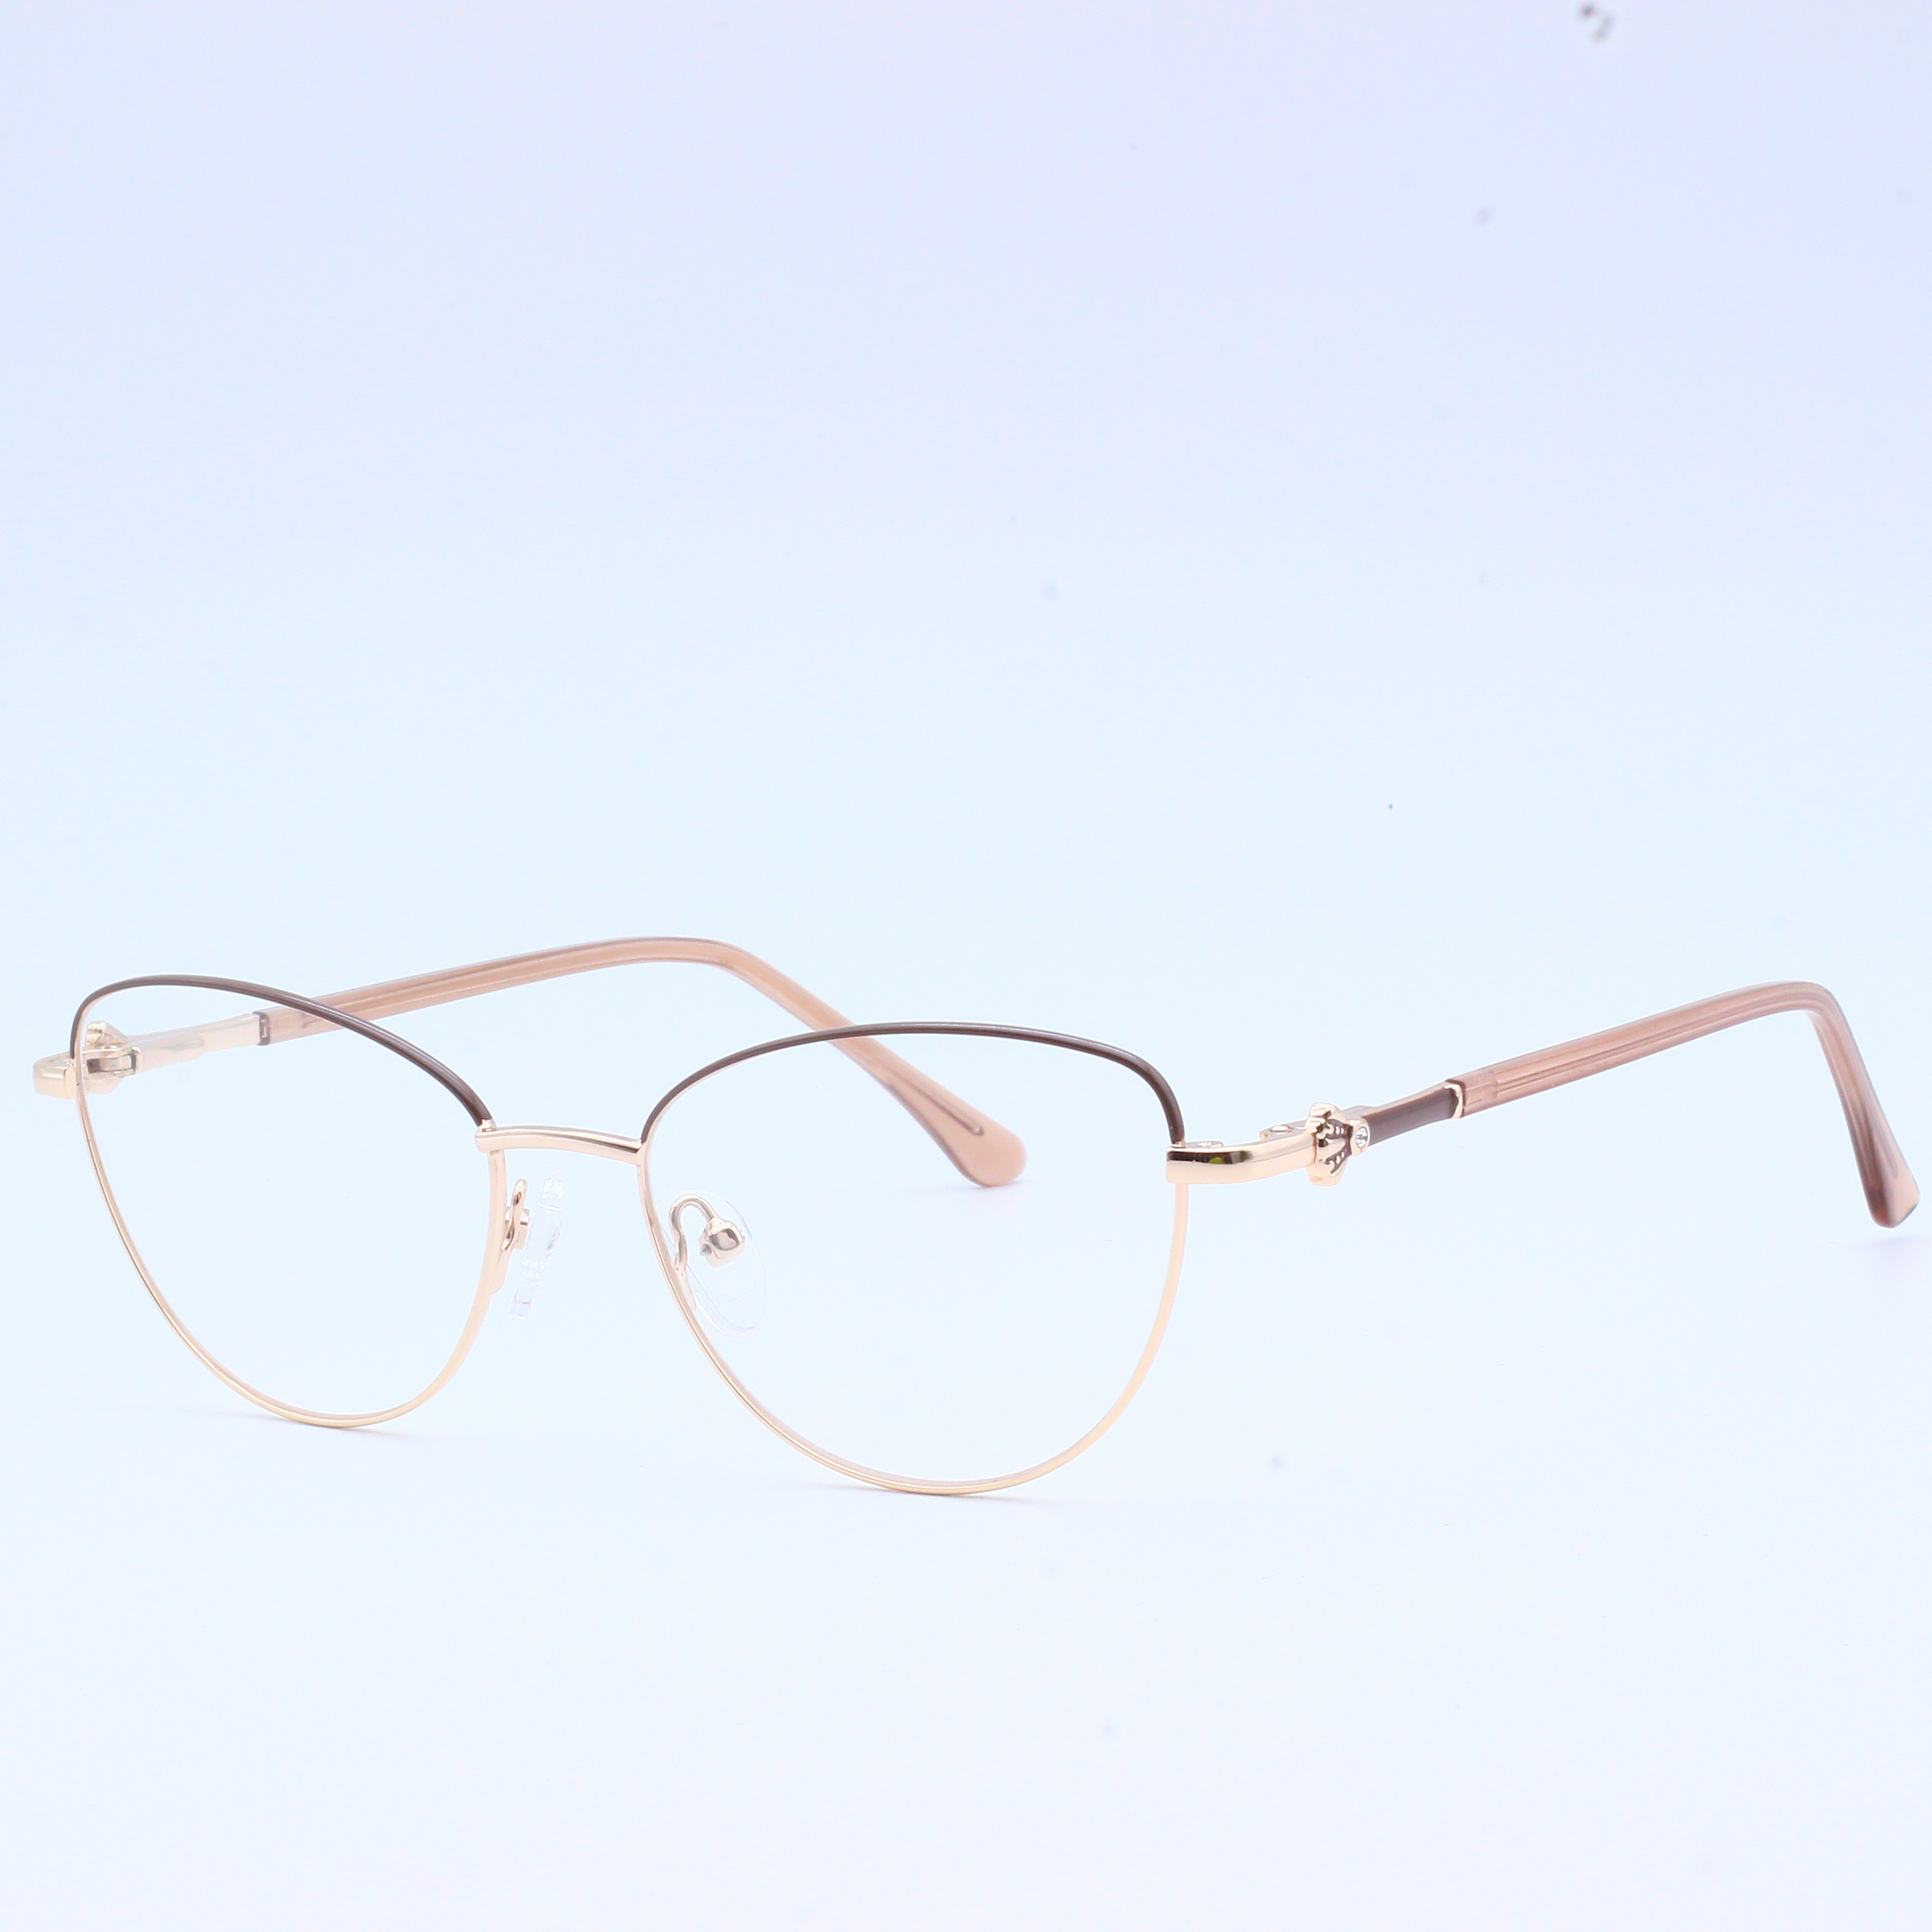 Metal Spring Hinge Cat Eye Glasses Frames (7)